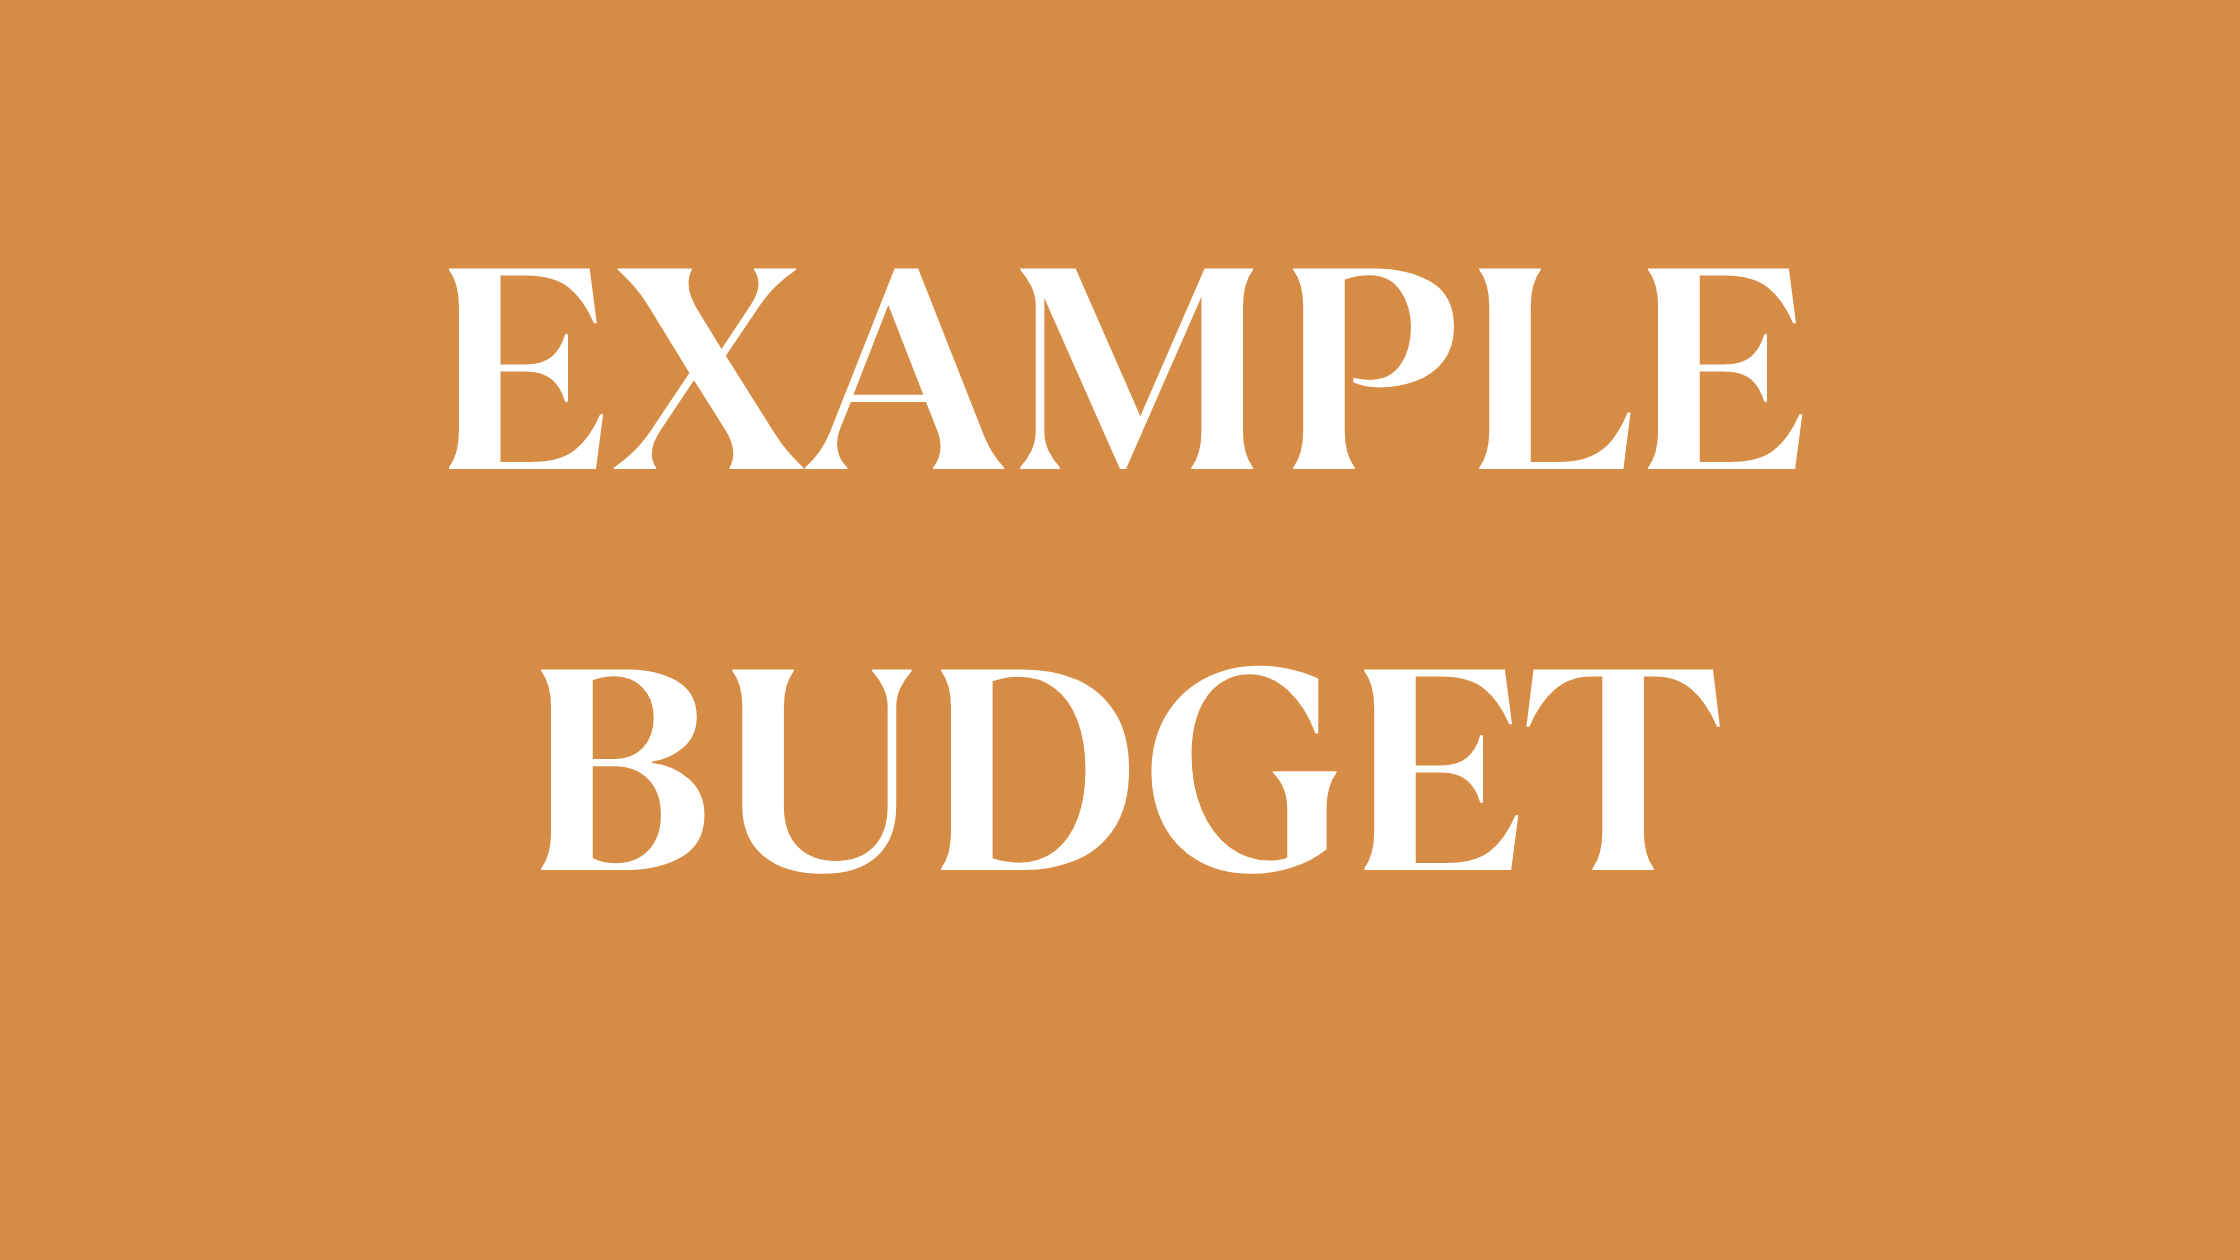 Example Monthly Budget Breakdown!